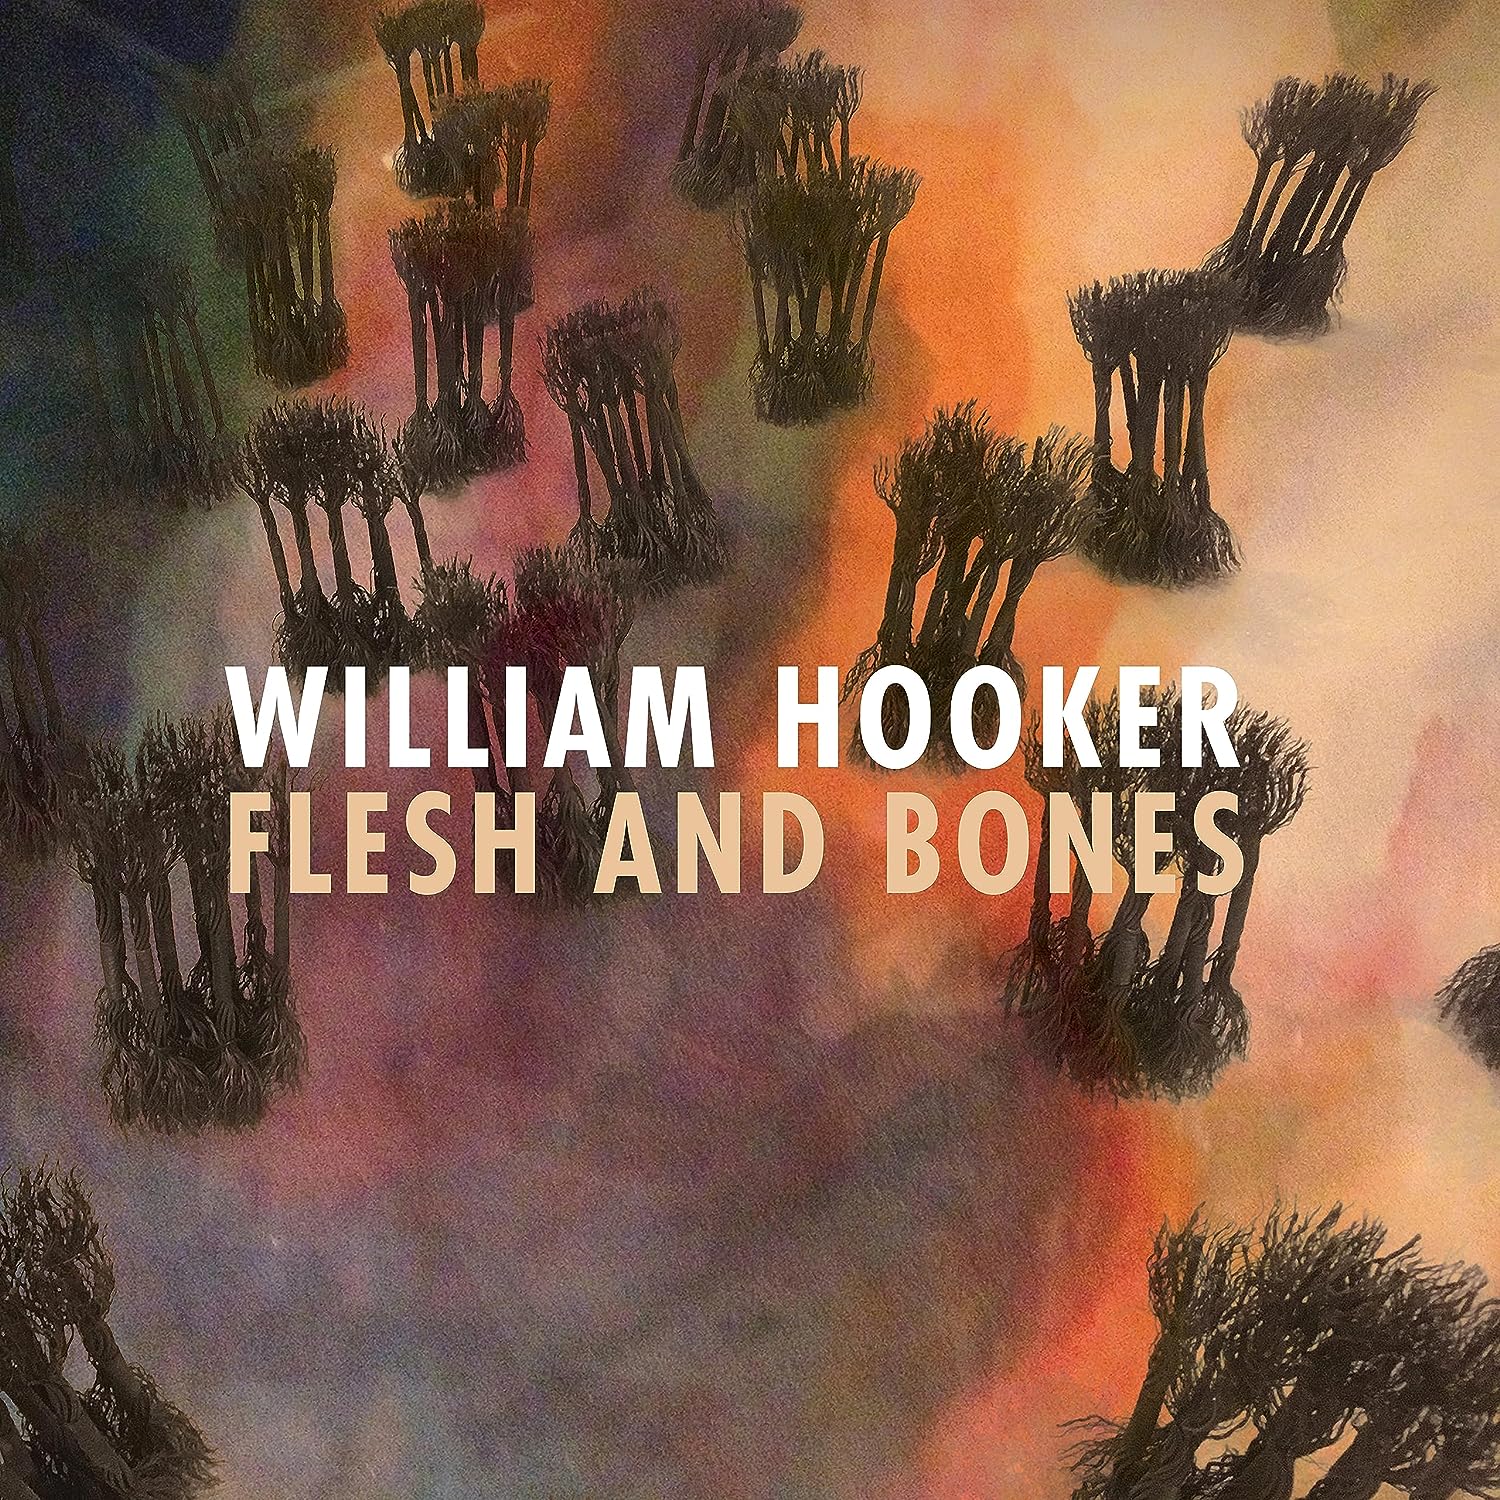 WILLIAM HOOKER - Flesh and Bones cover 